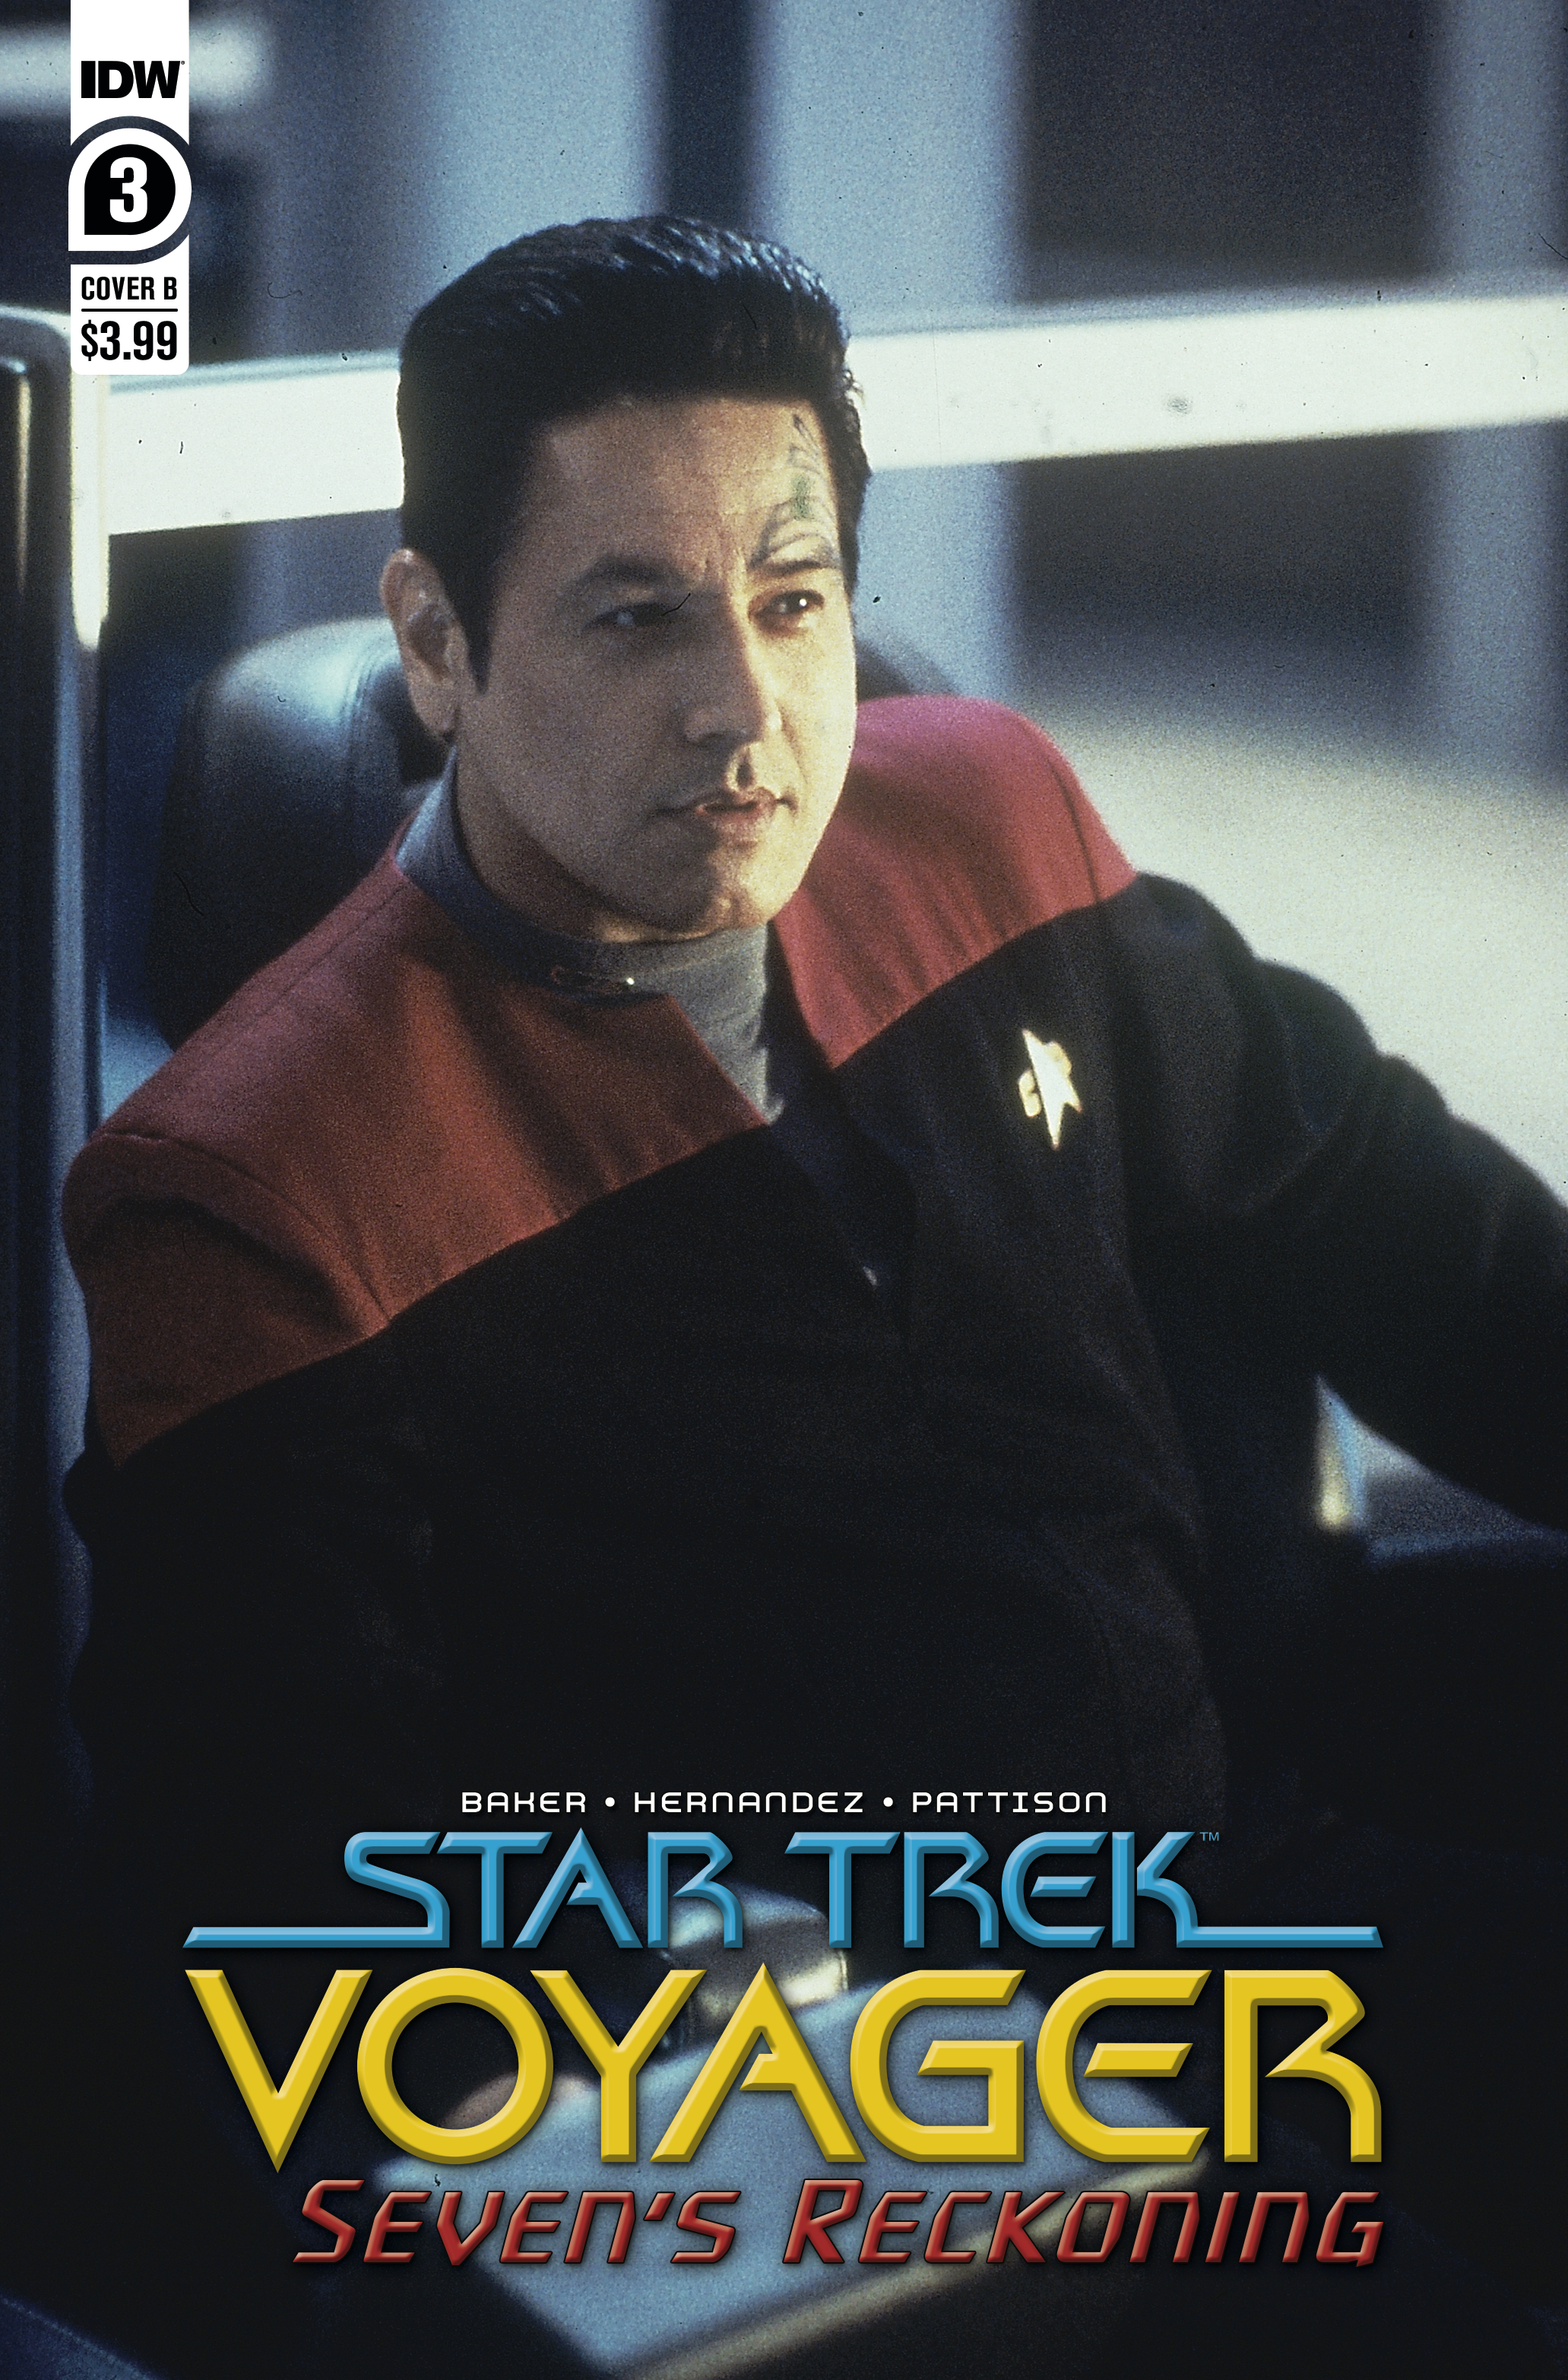 Star Trek Voyager Sevens Reckoning #3 Cover B Photo (Of 4)